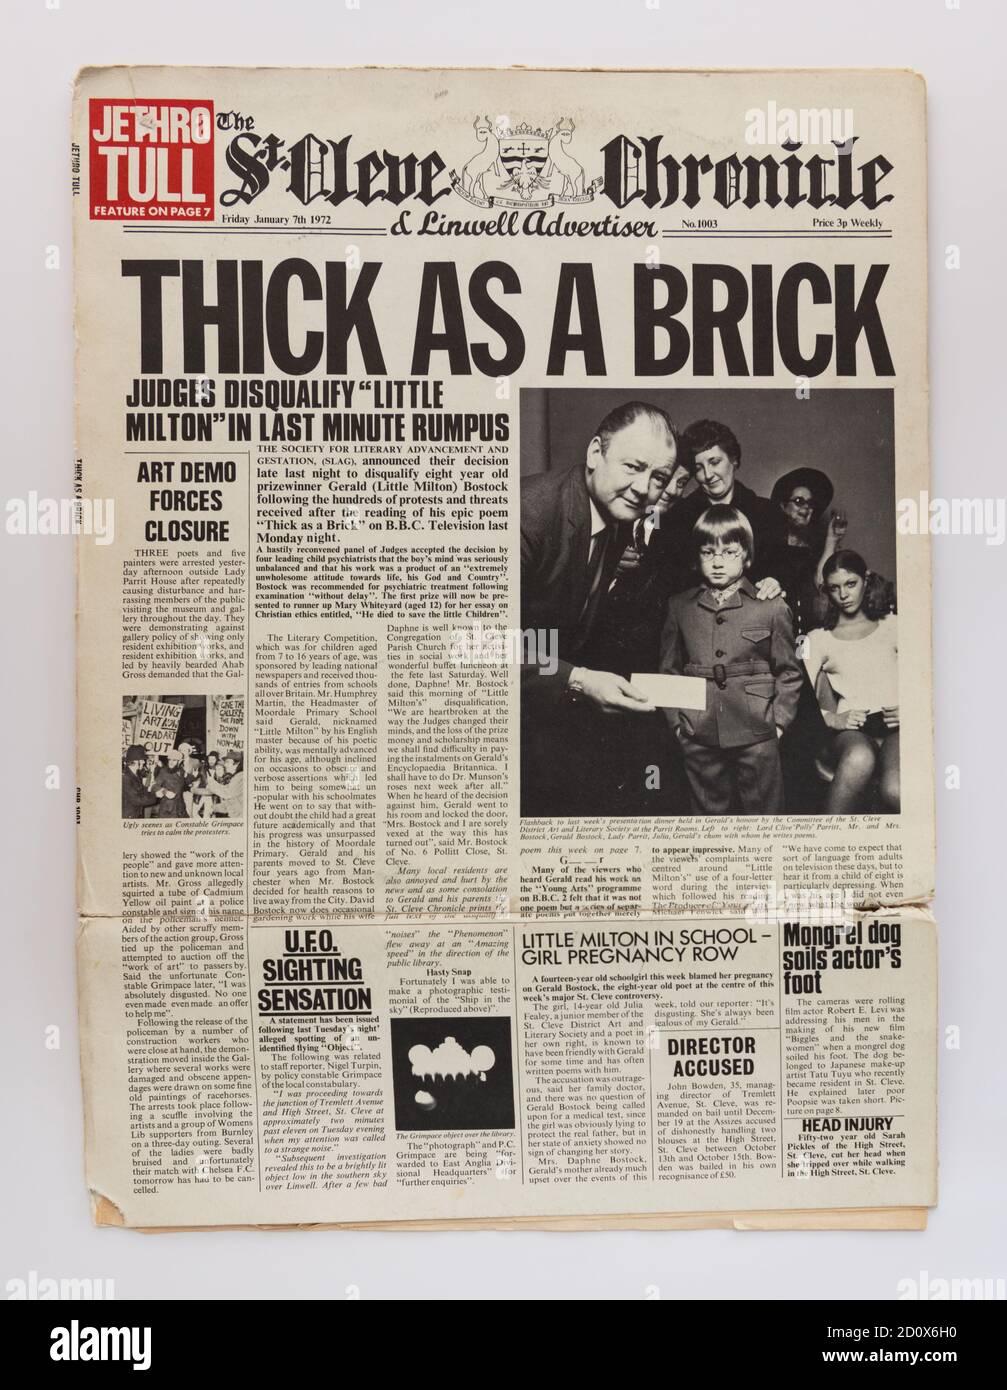 Thick as a Brick FOLD Out álbum de periódico manga 1972 - Jethro Tull Foto de stock